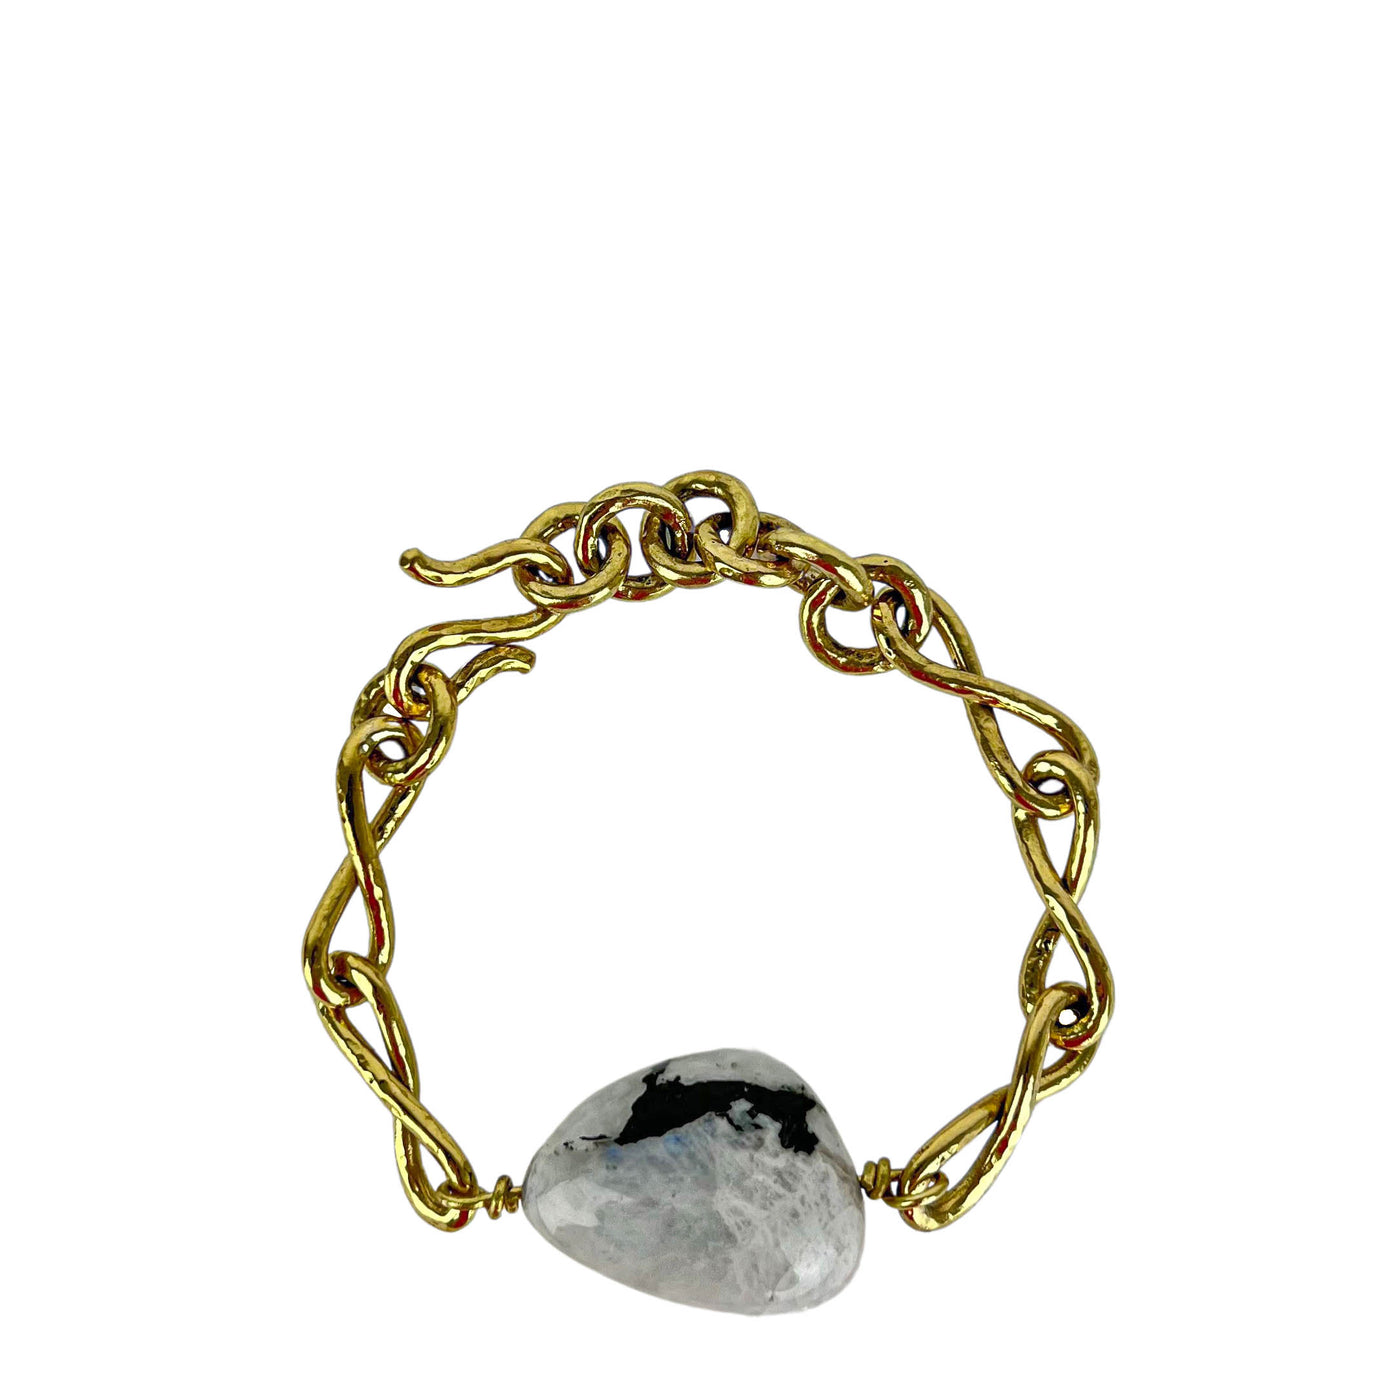 Ulla Johnson Tumbled Stone Bracelet in White Ocean Jasper - Discounts on Ulla Johnson at UAL